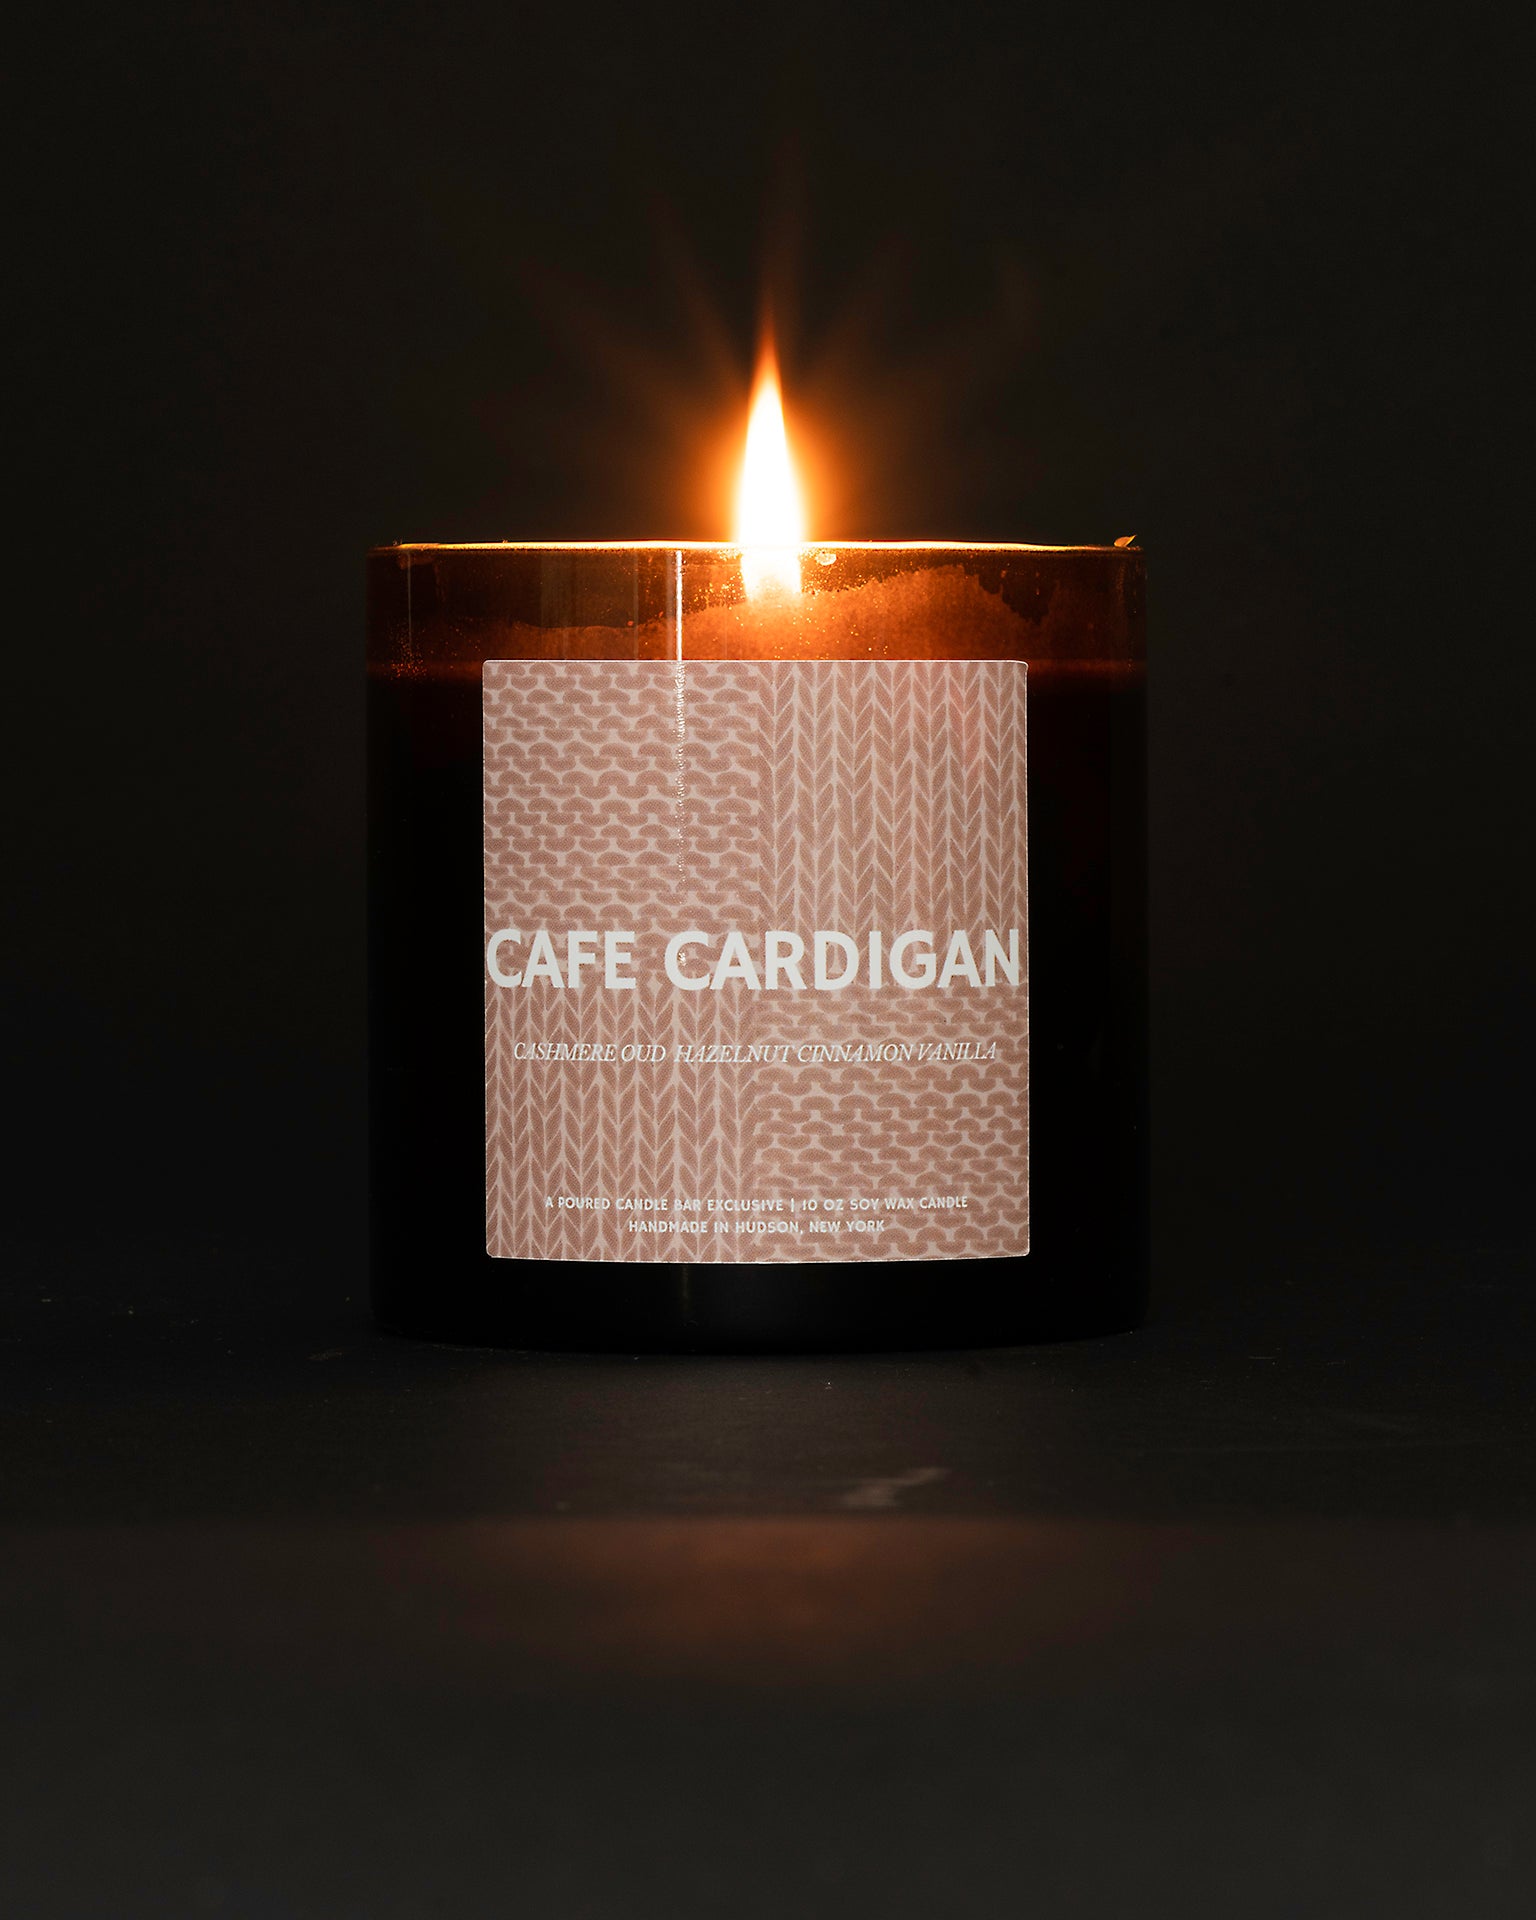 Cafe Cardigan